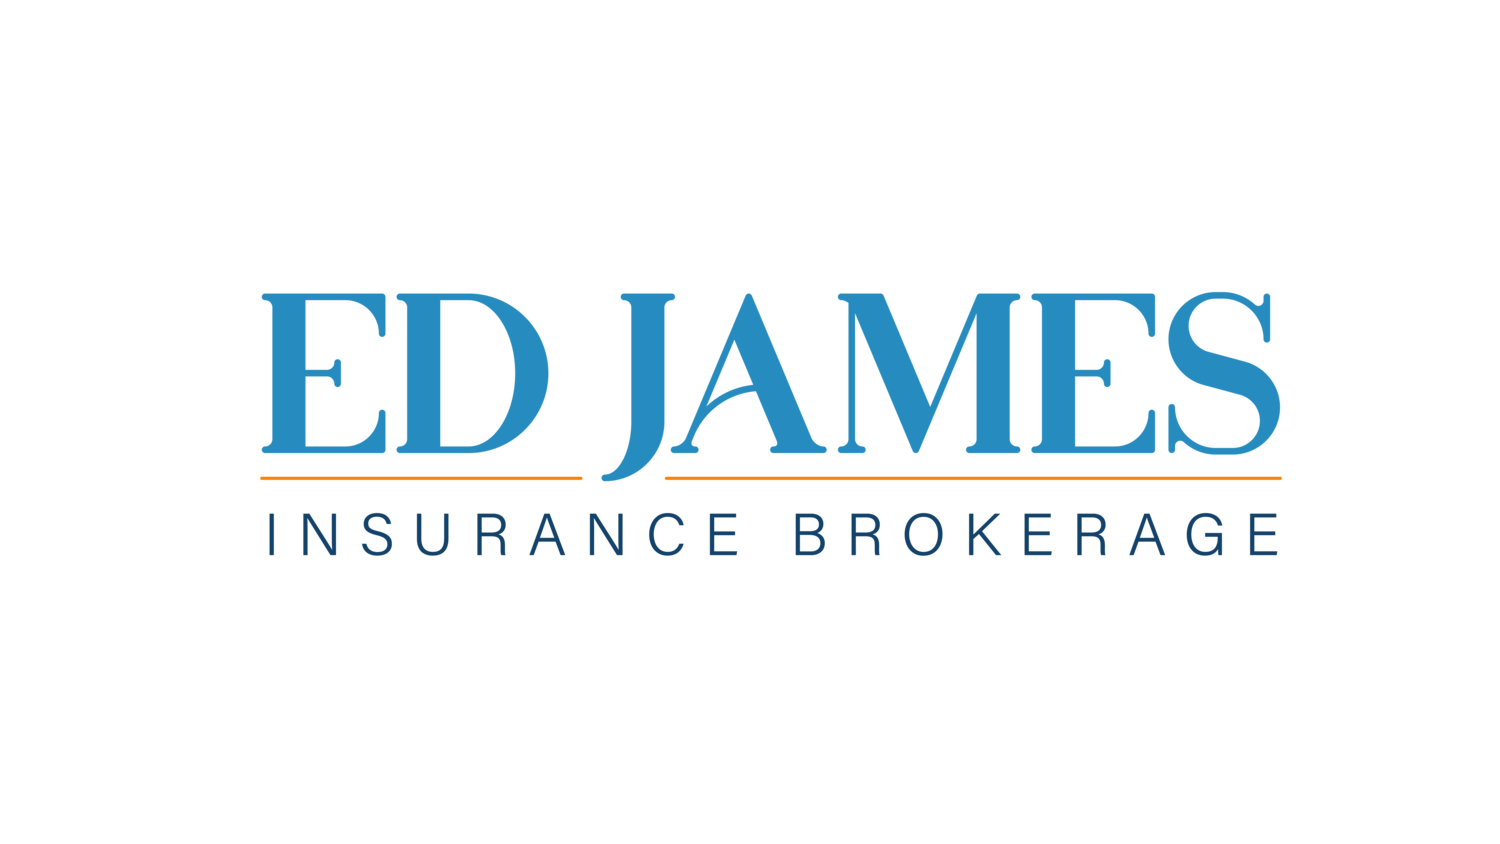 Ed James Insurance Brokerage